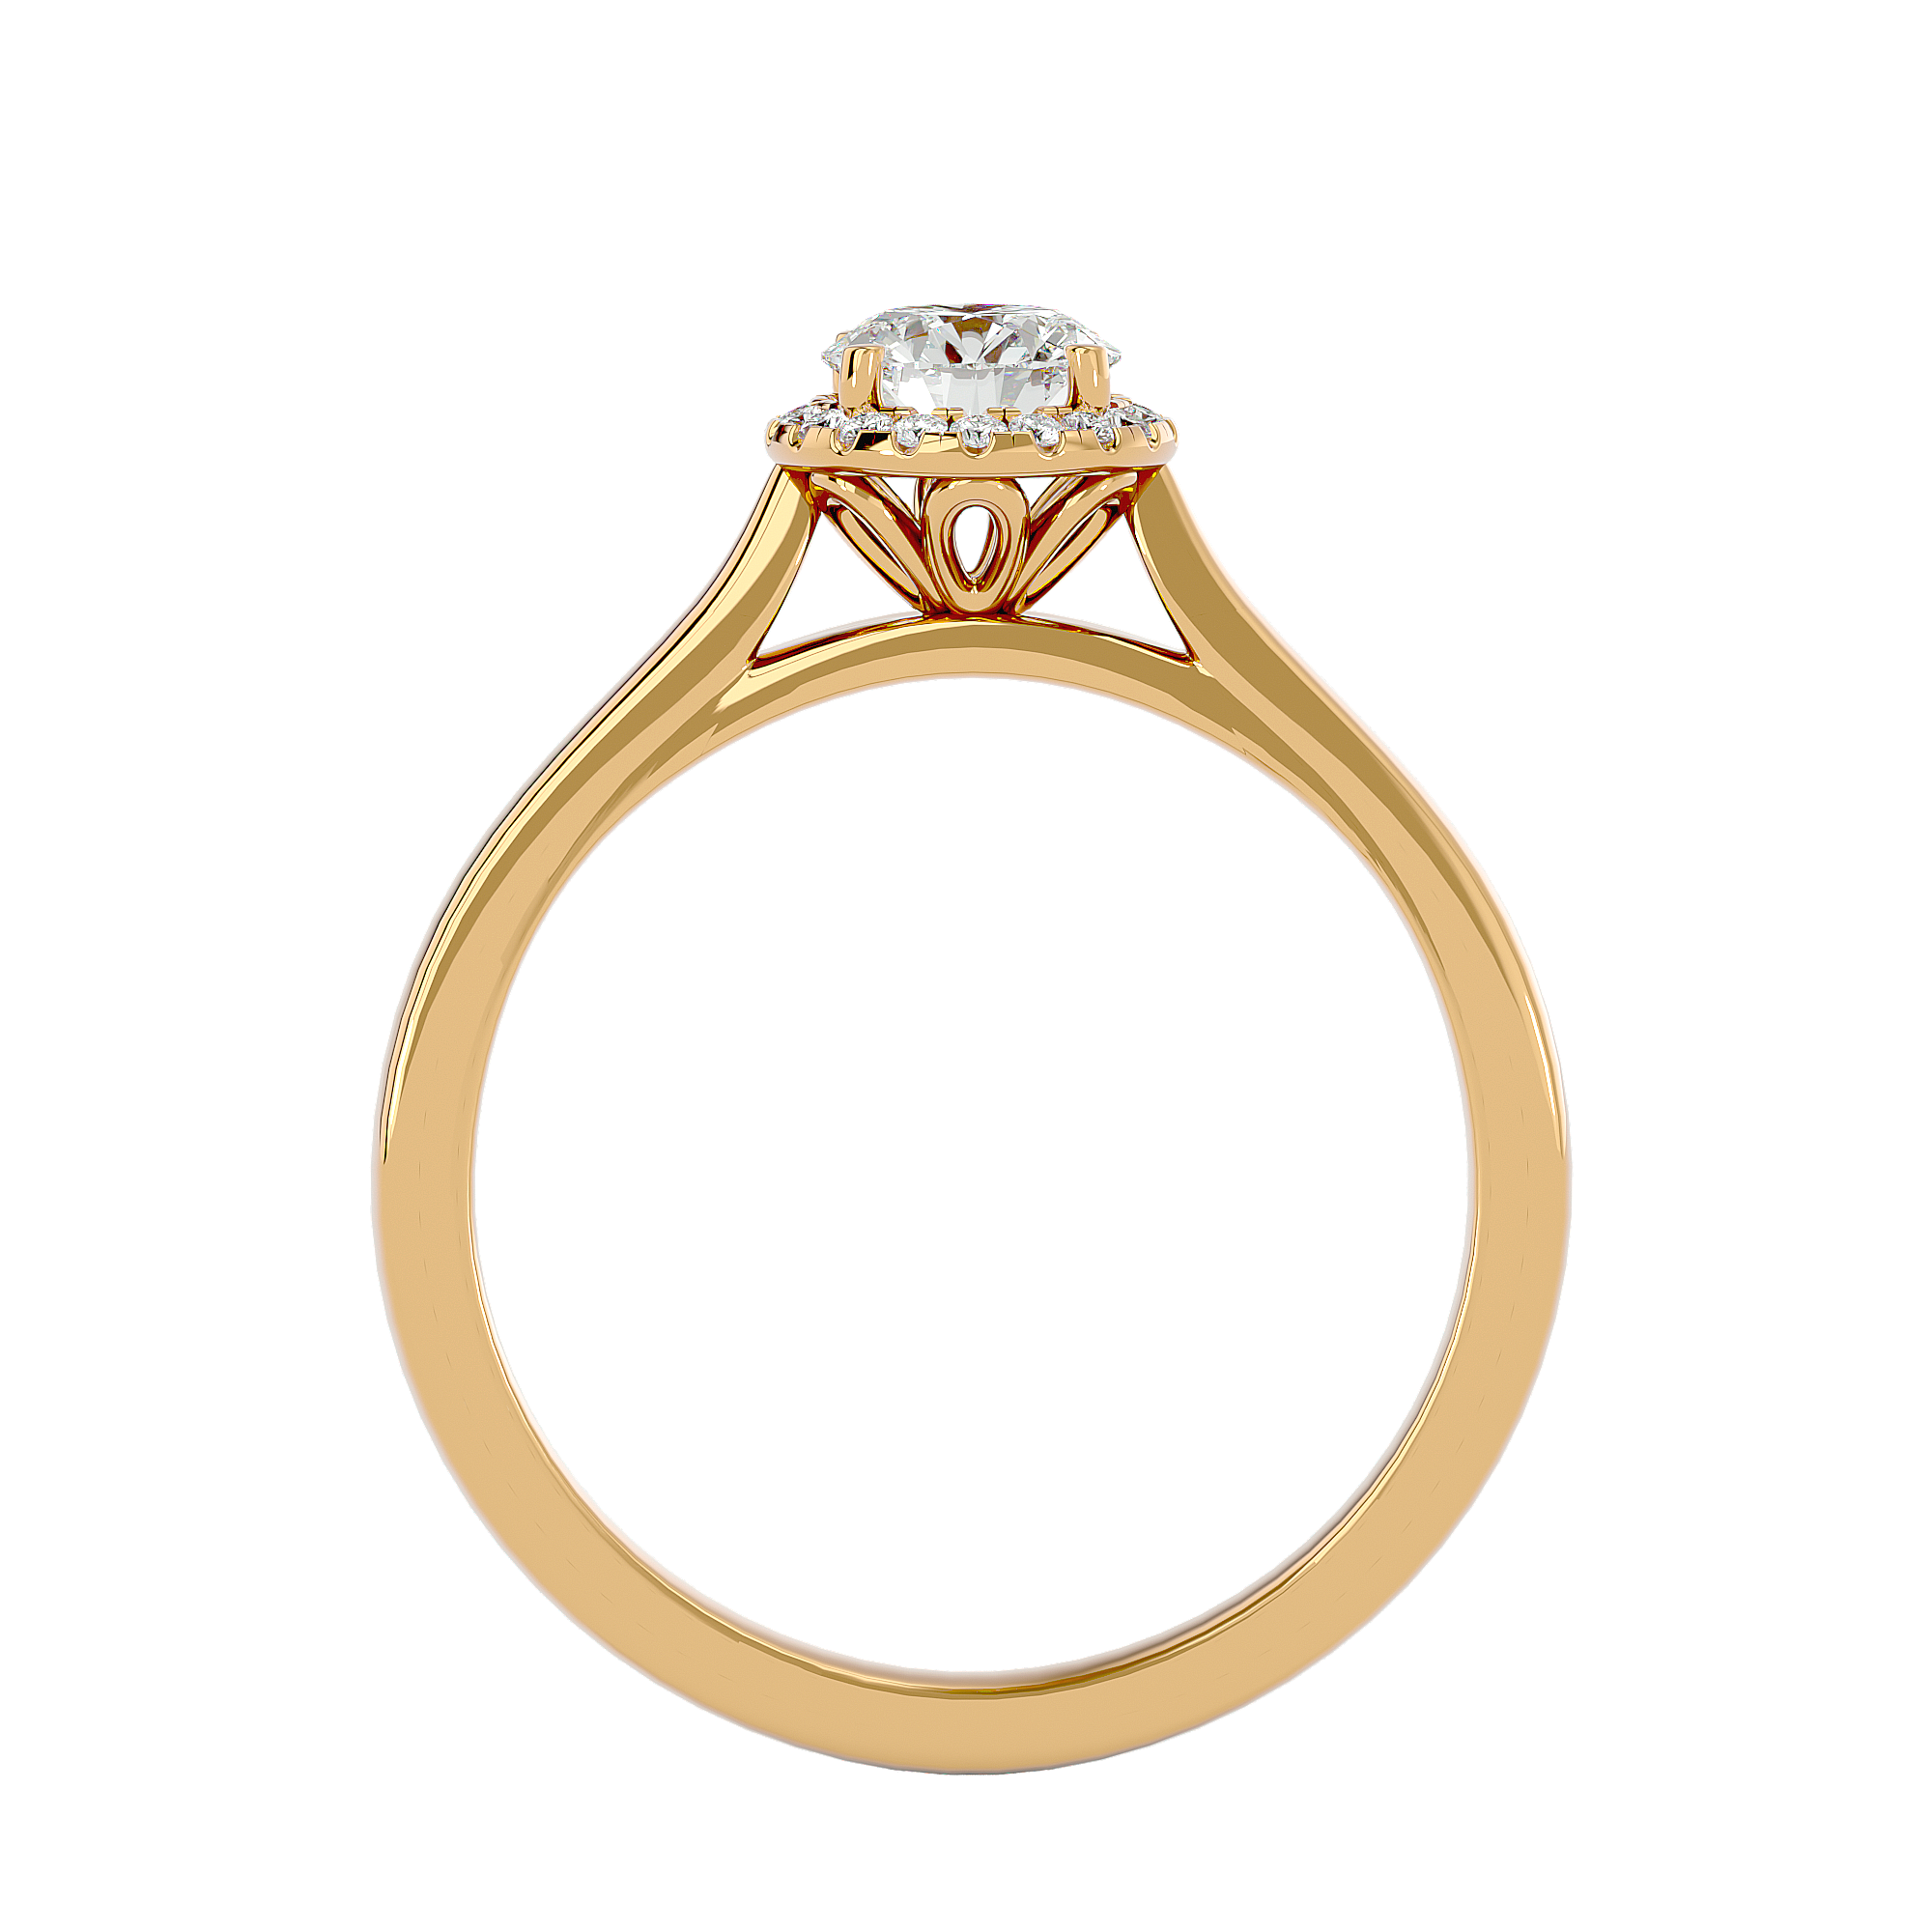 5/8 ctw Round Lab Grown Diamond Halo Engagement Ring